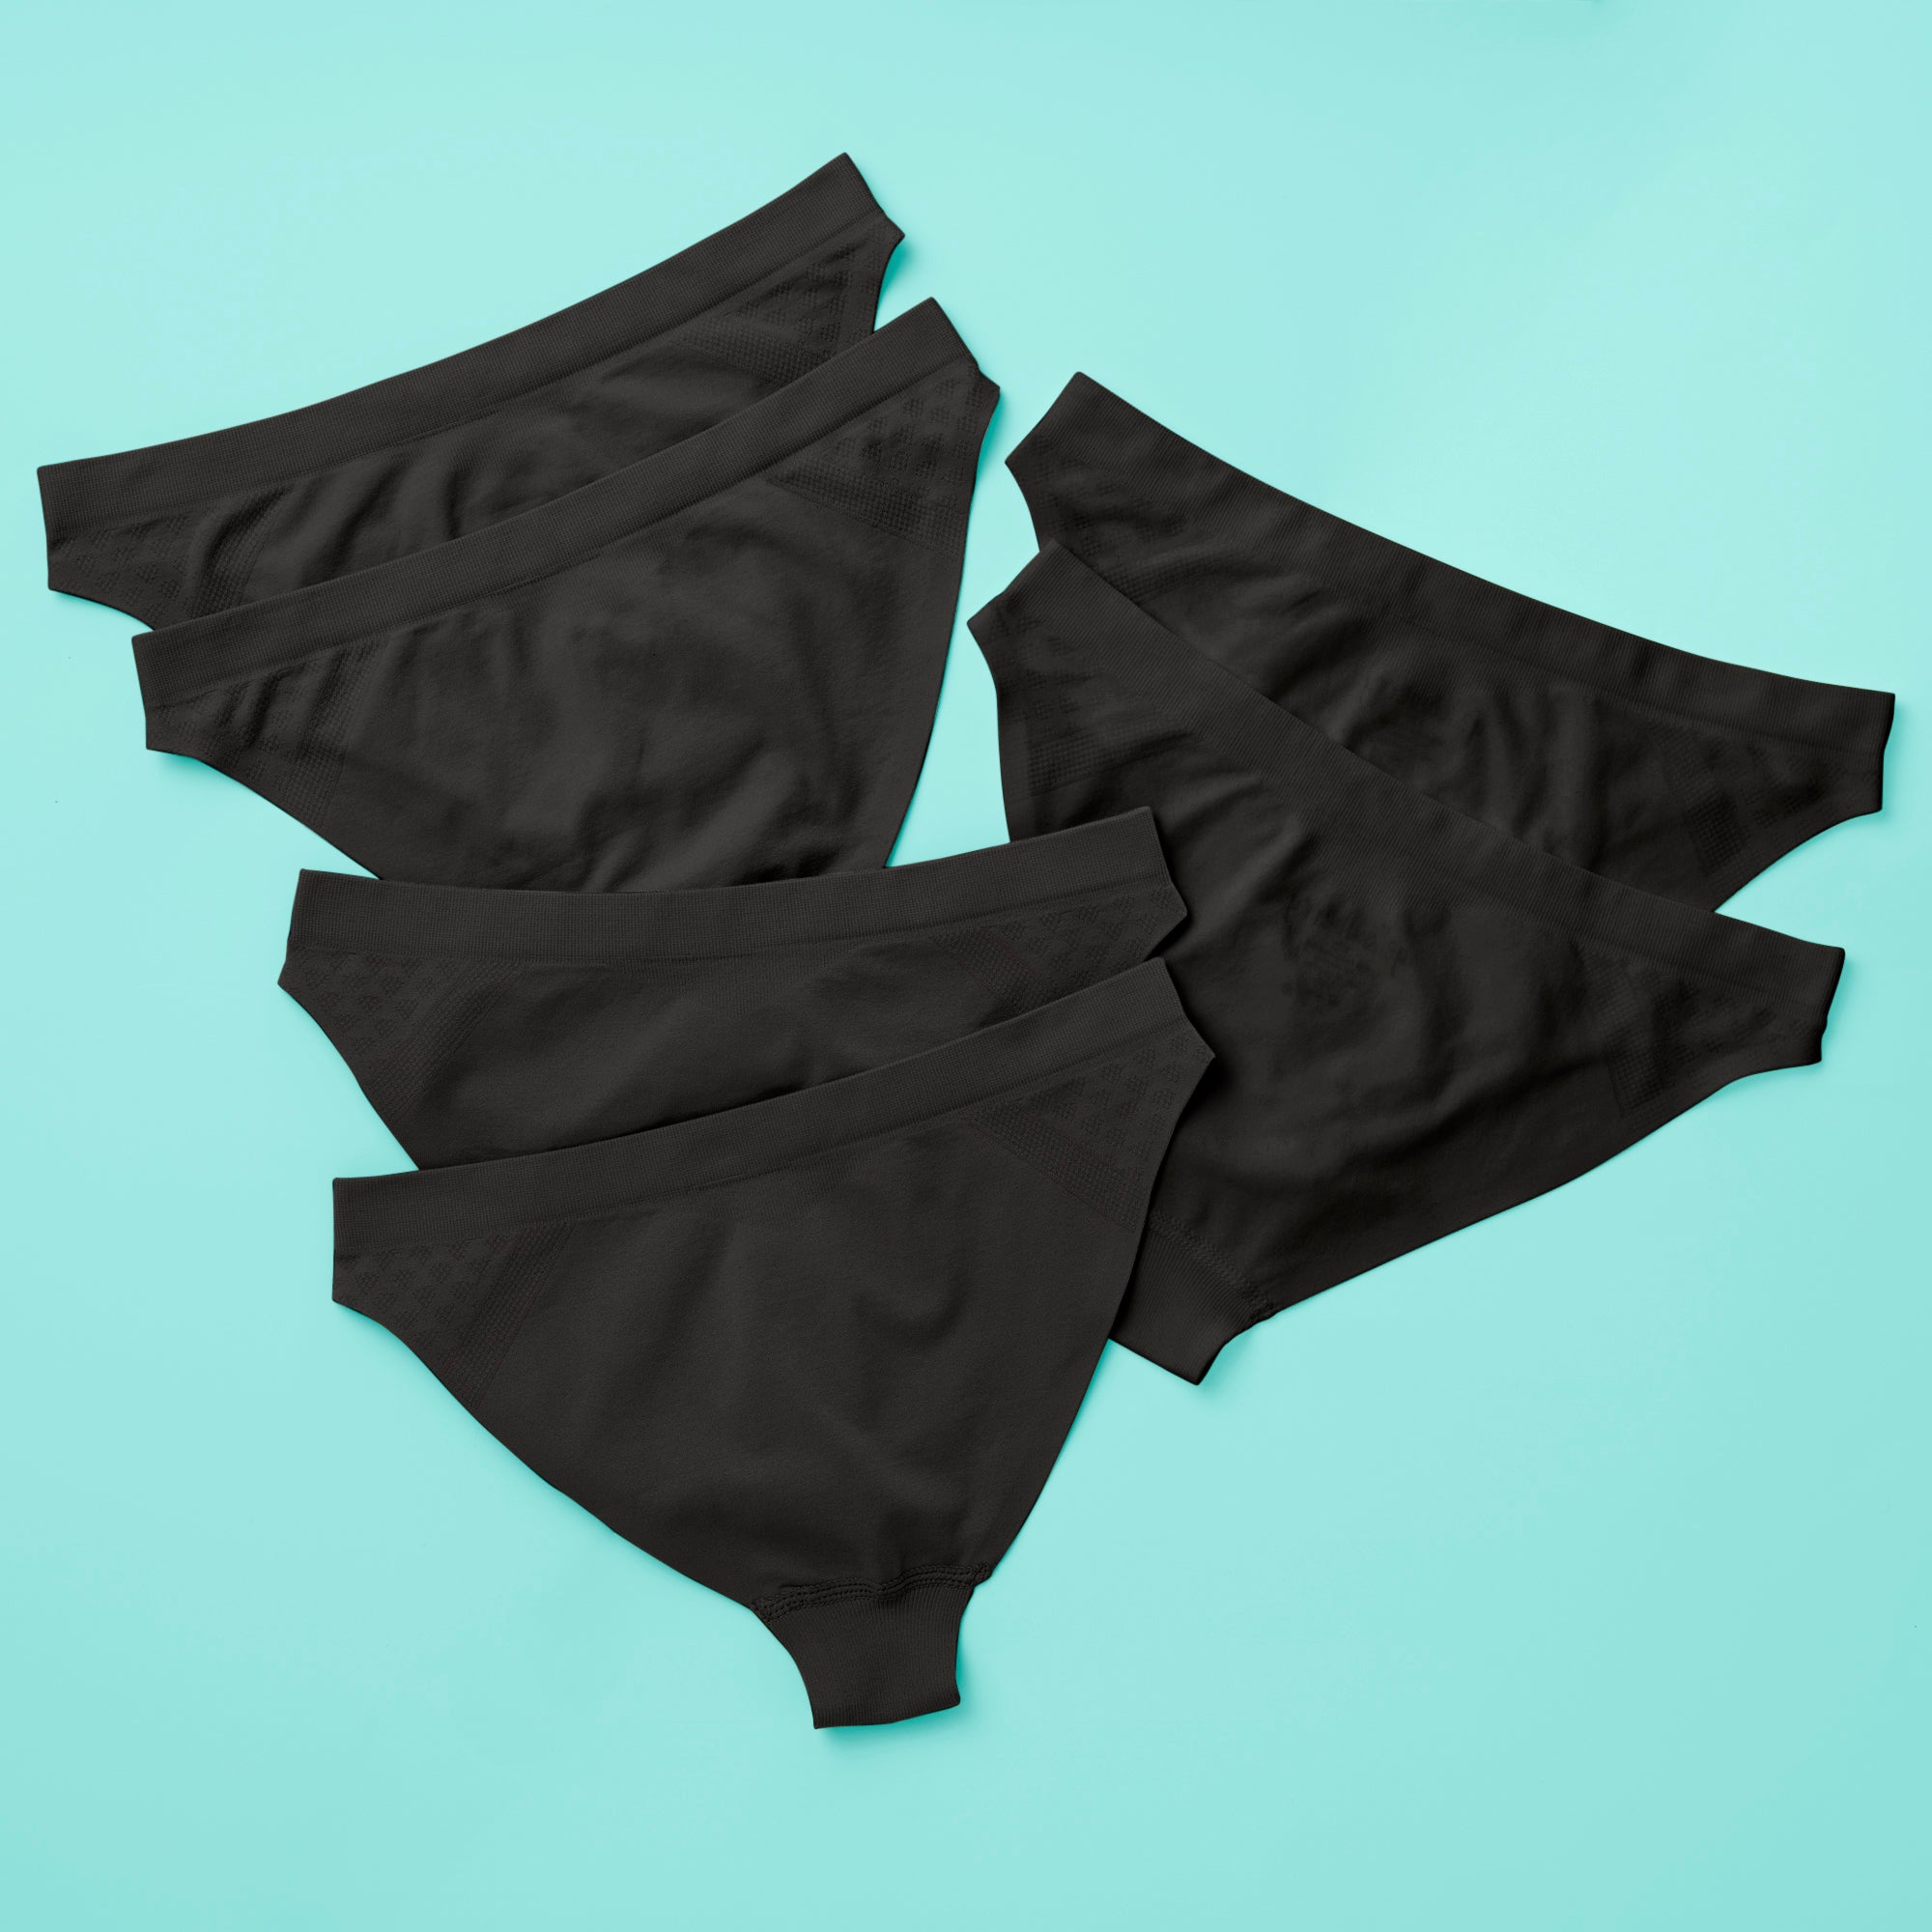 Yellowberry Scout Seamless Underwear Bundle 6PK